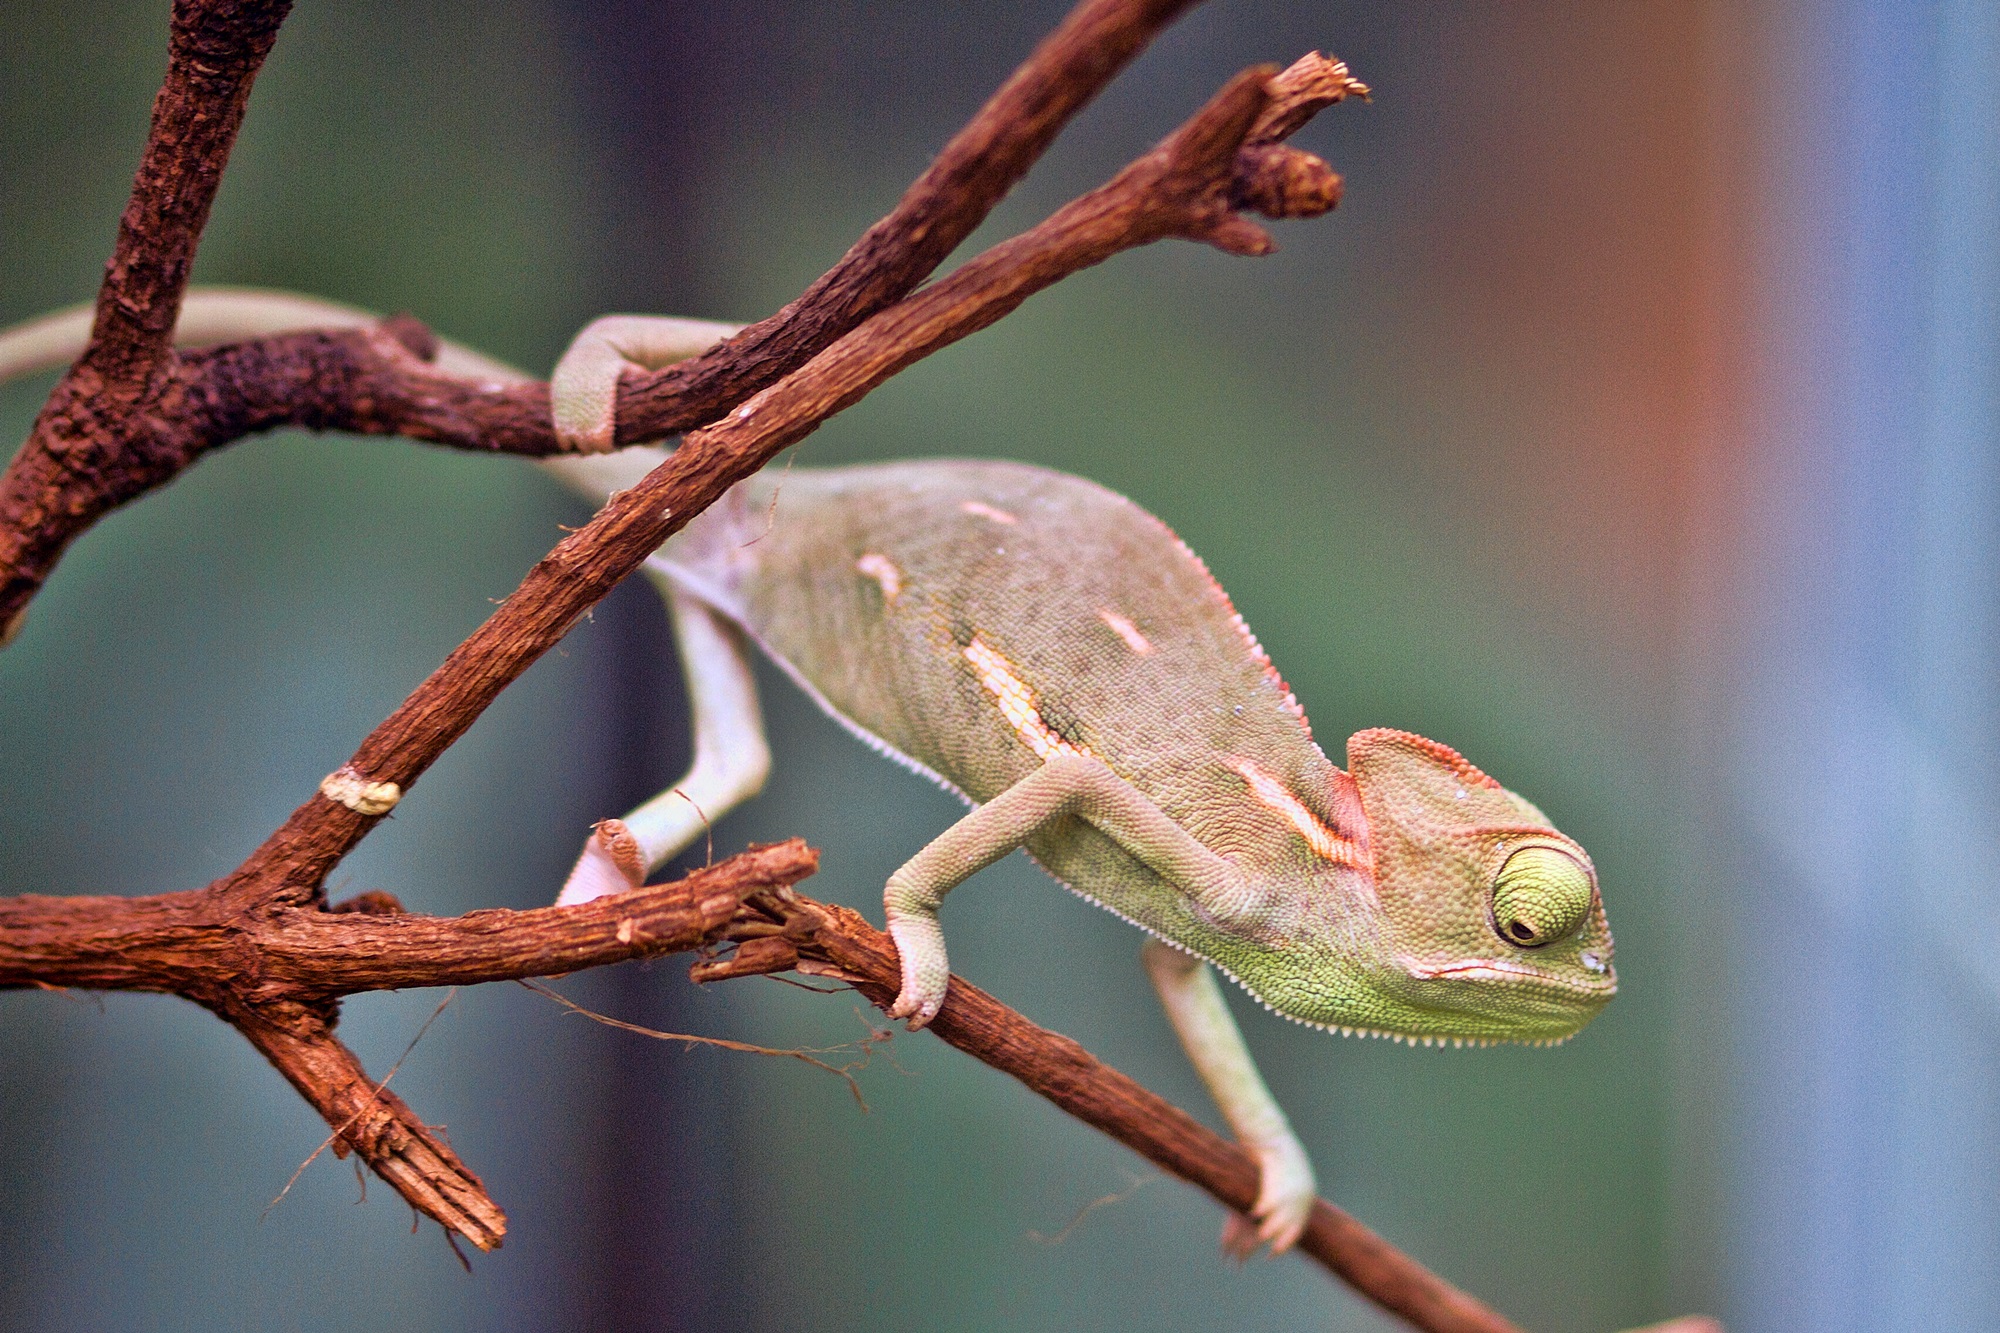 Veiled chameleon in the Biosphere Potsdam